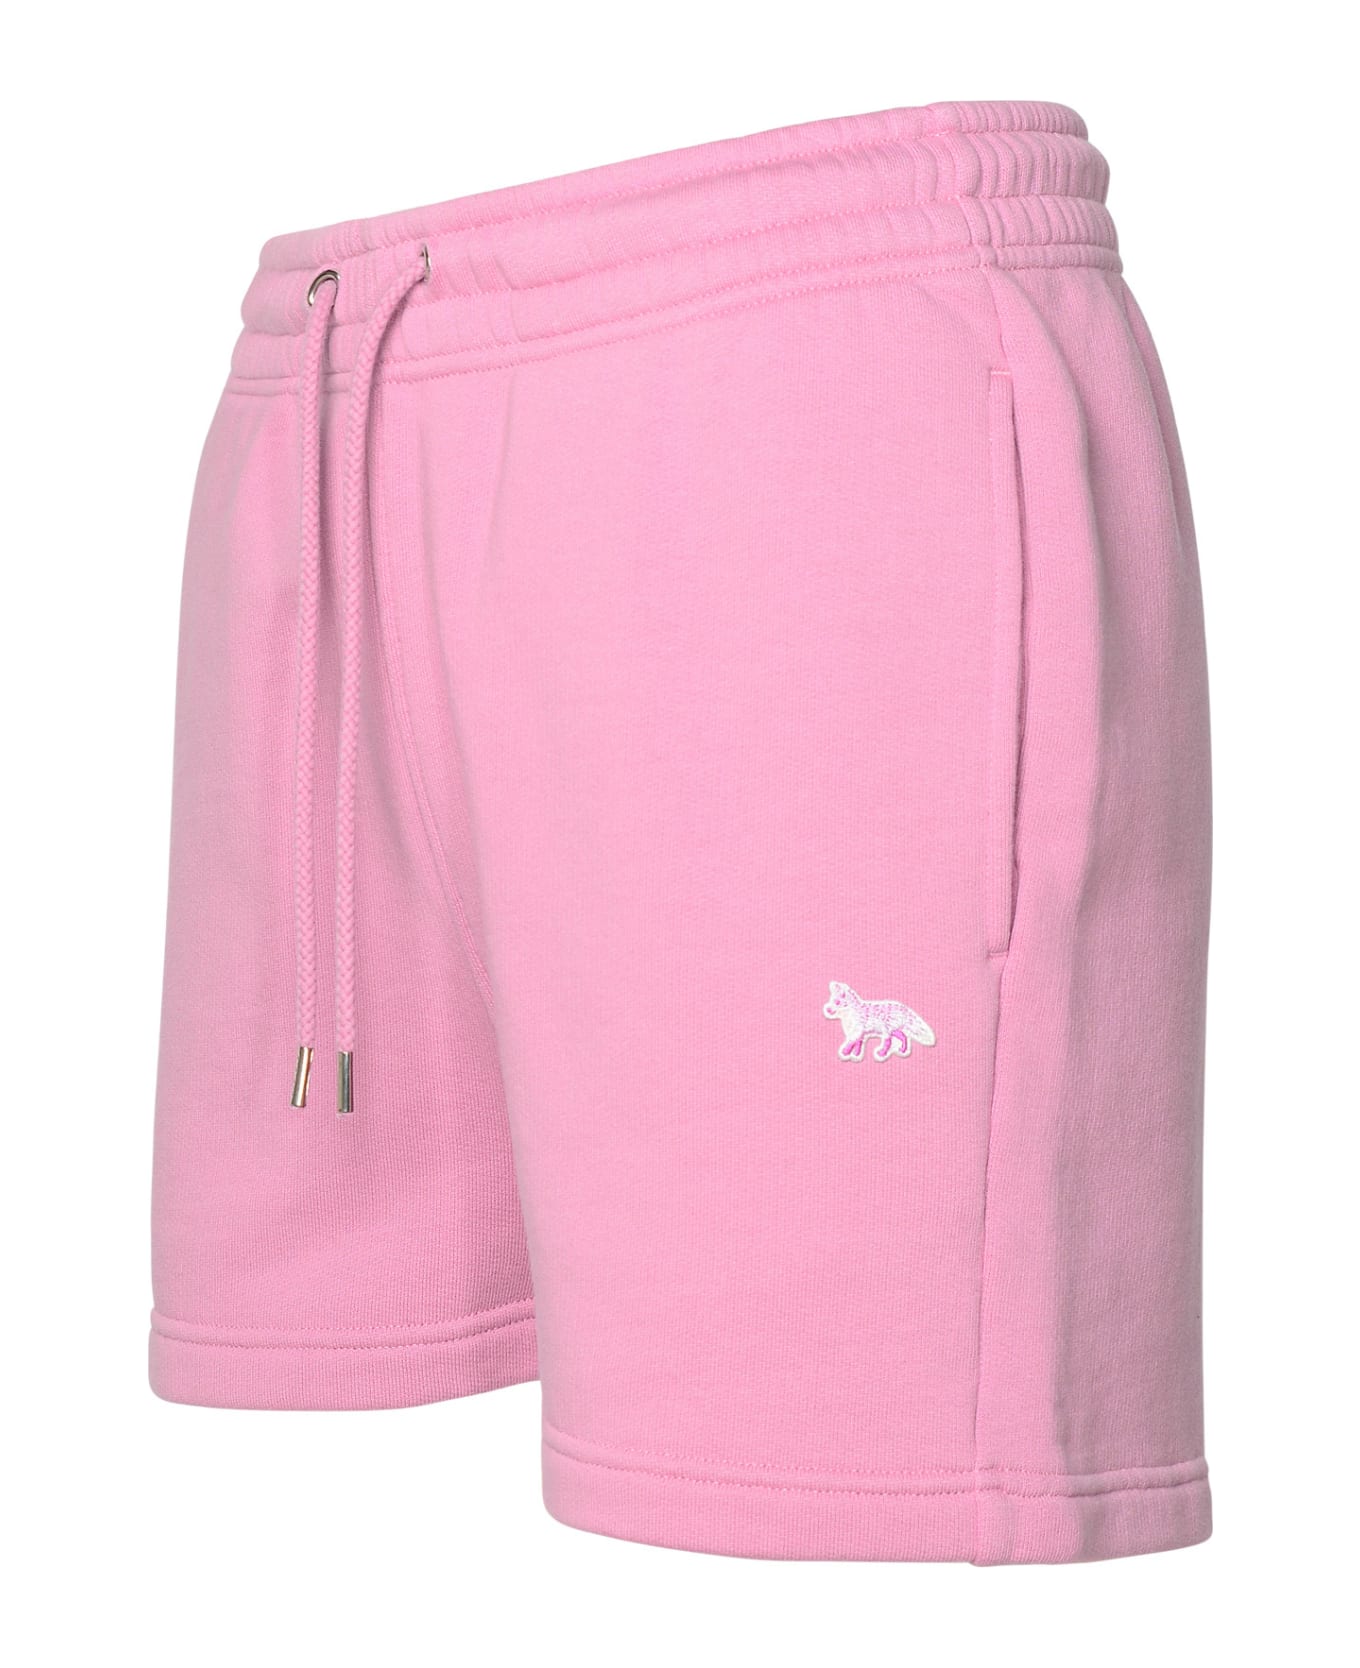 Maison Kitsuné Pink Cotton Shorts - Pink